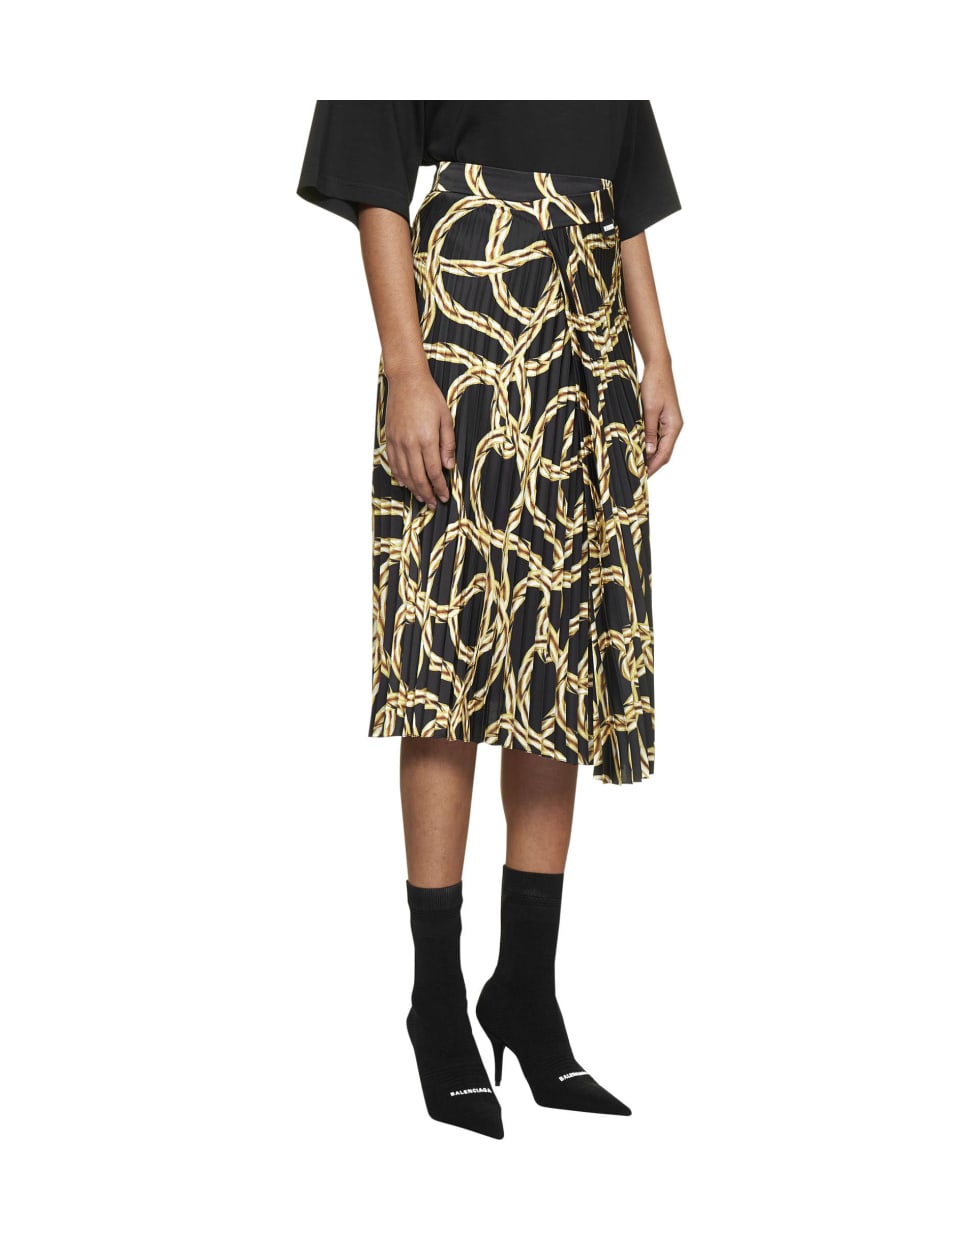 VETEMENTS Skirt - Gold chain black